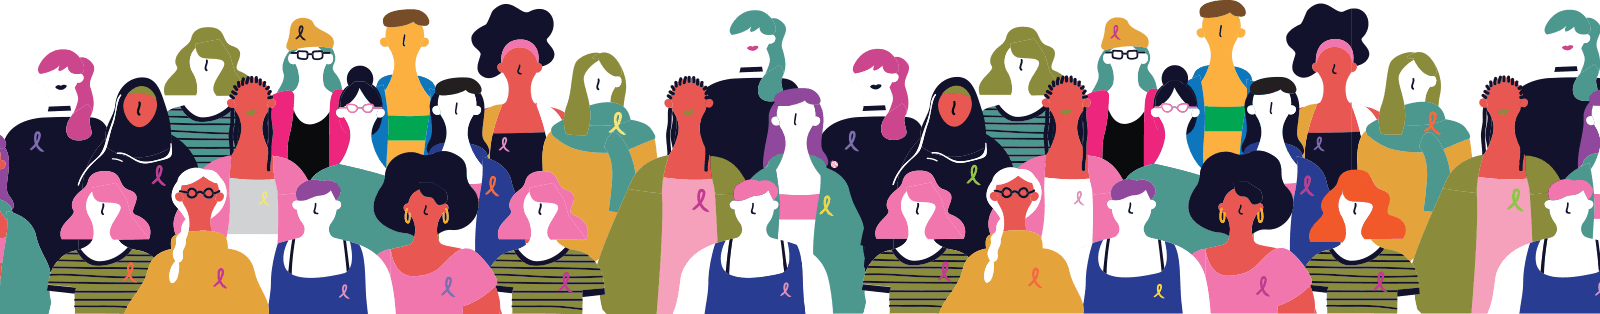 Let's Talk: Women's Health & Wellness